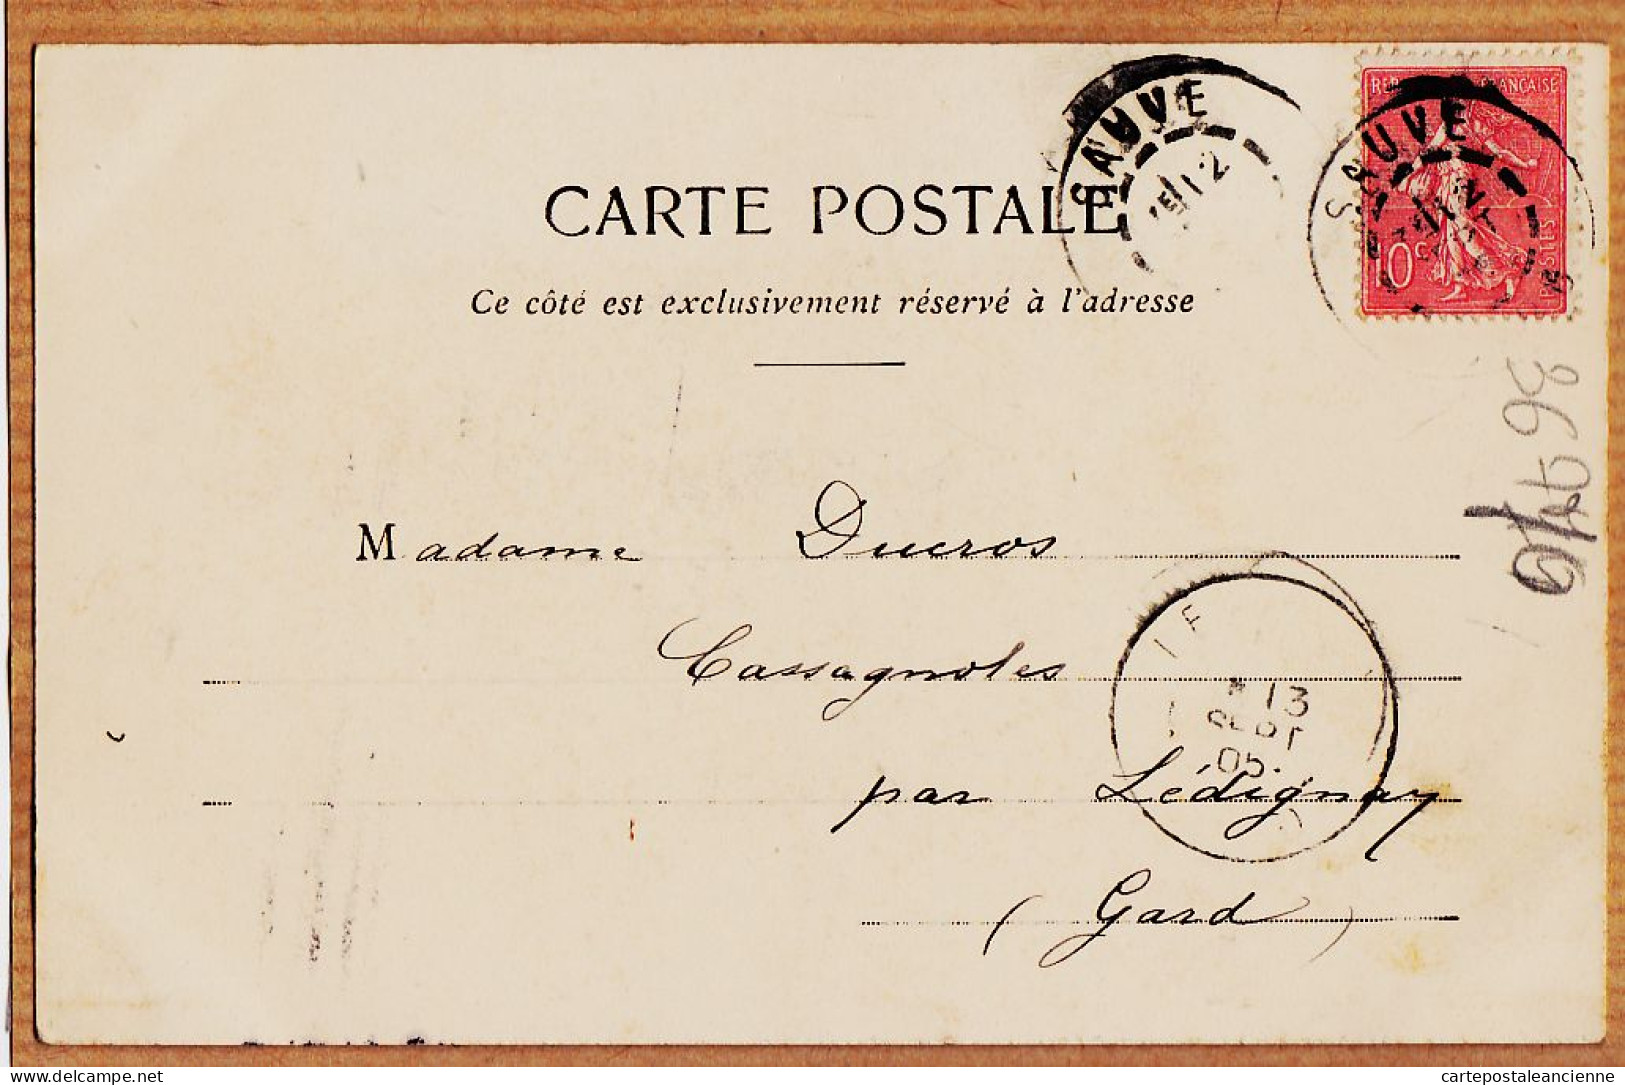 09729 / ⭐ ♥️  Peu Commun QUISSAC Gard Hameau De BEAUREGARD 1905 à DUCROS Cassagnoles Lédignan-Photo A.B & Cie - Quissac